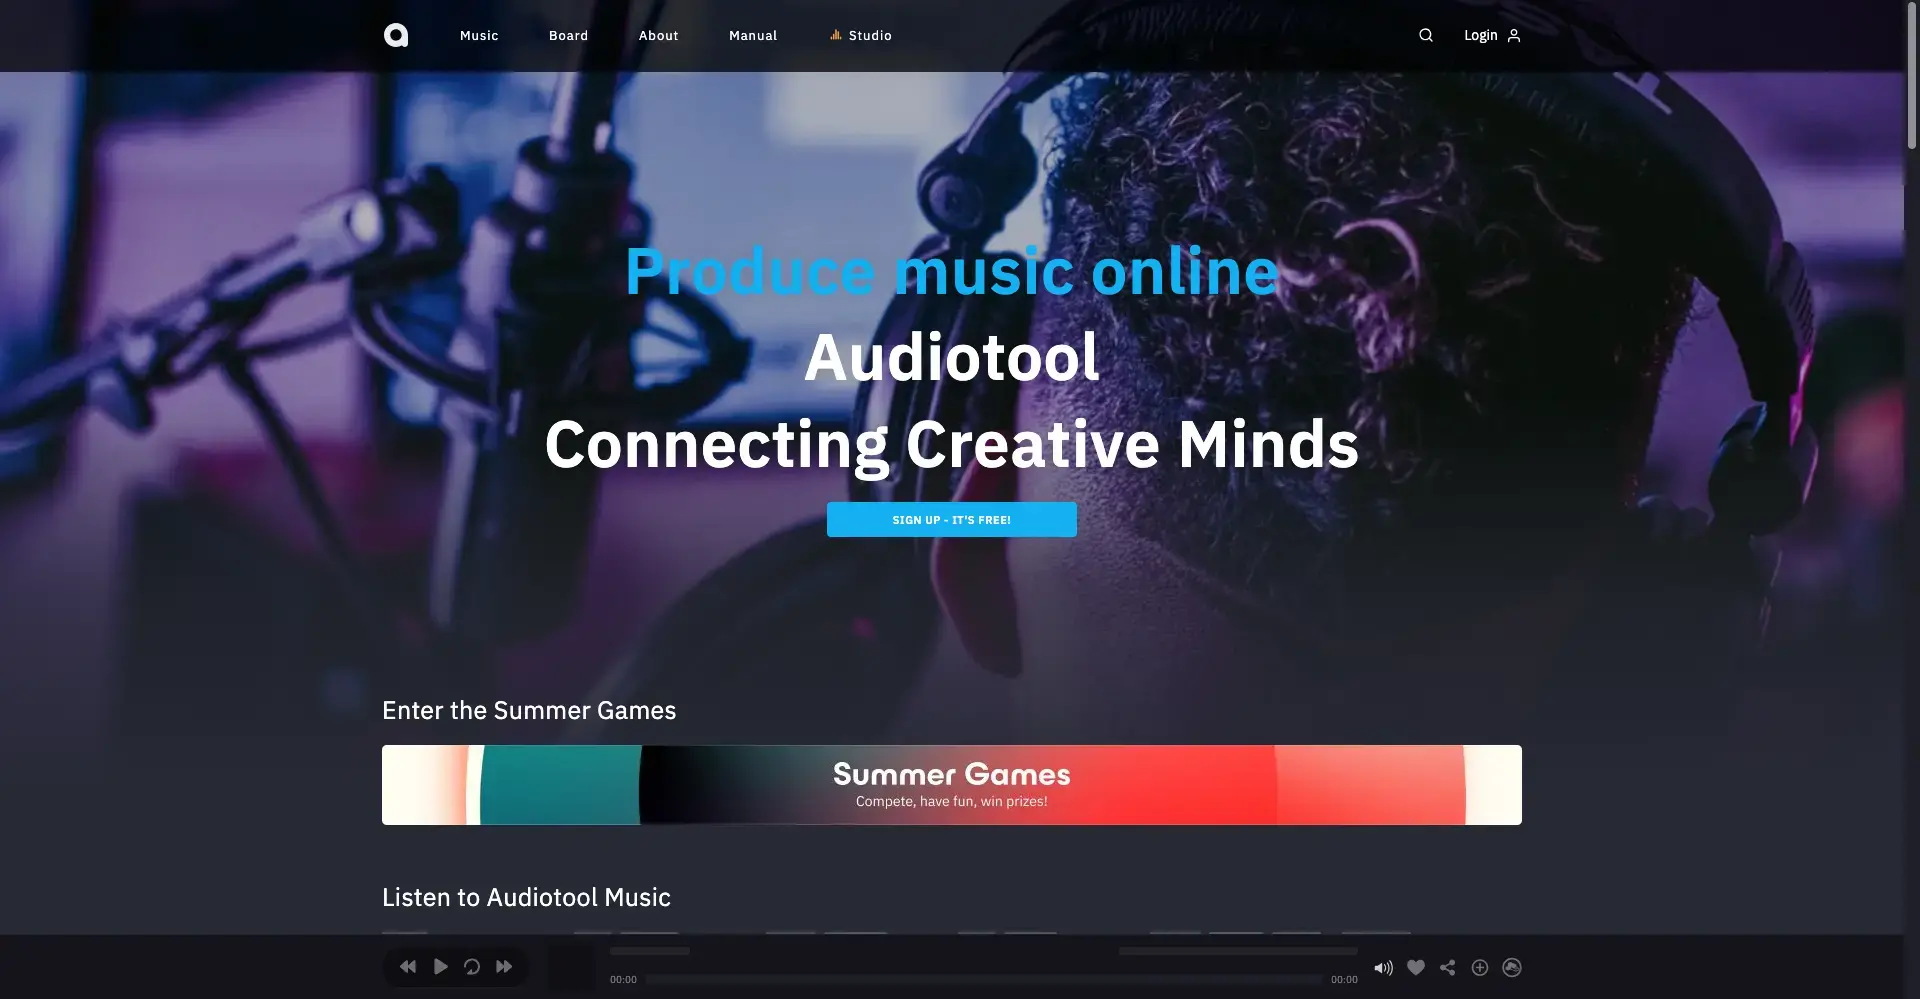 Audiotool homepage